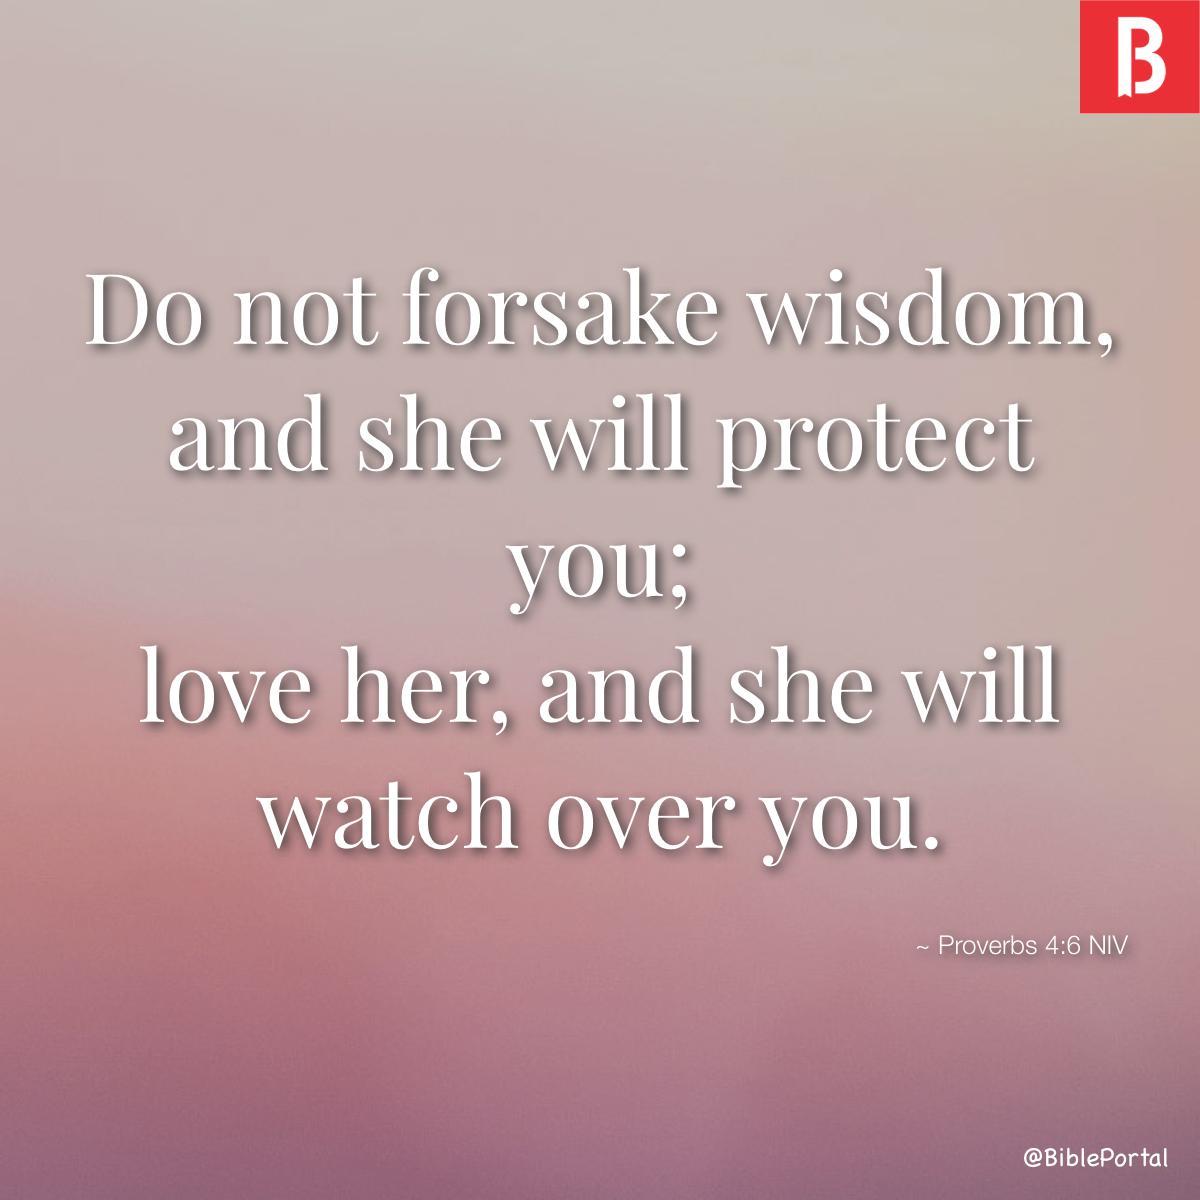 Proverbs 4:6 NIV